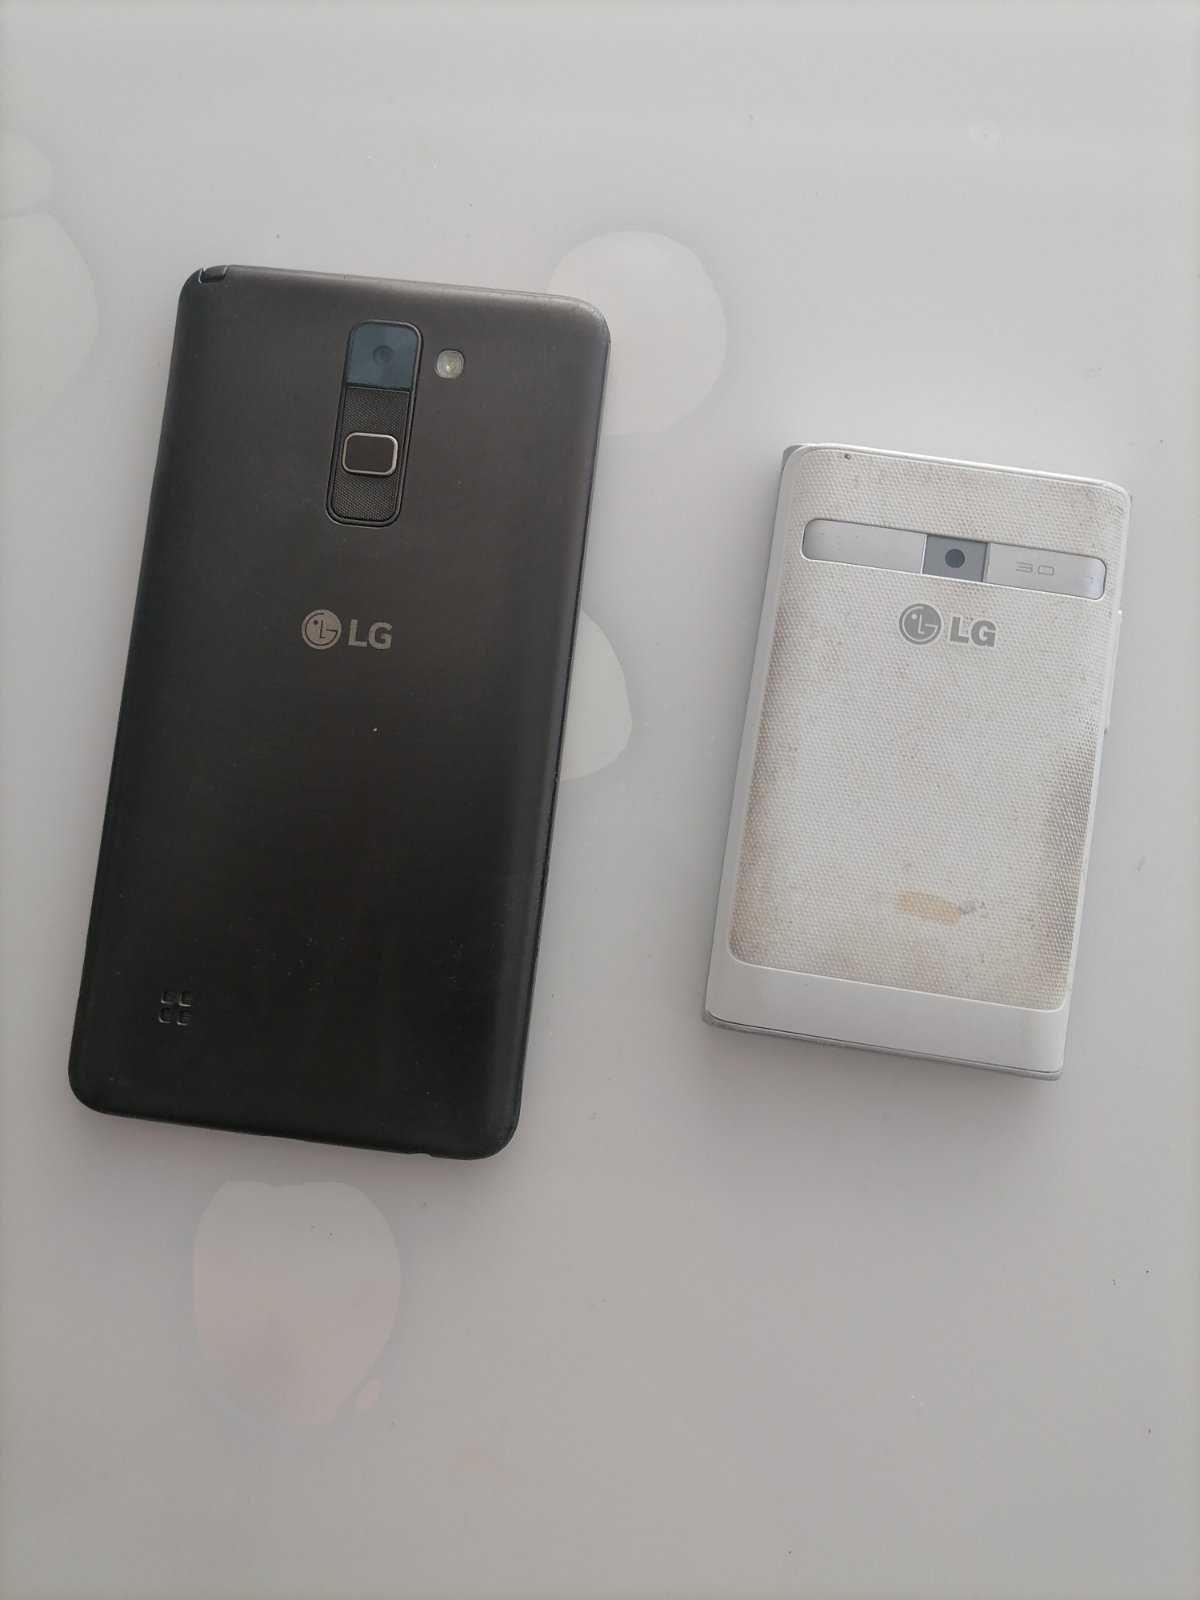 ДВА неработещи смарт телефона LG за 20лв